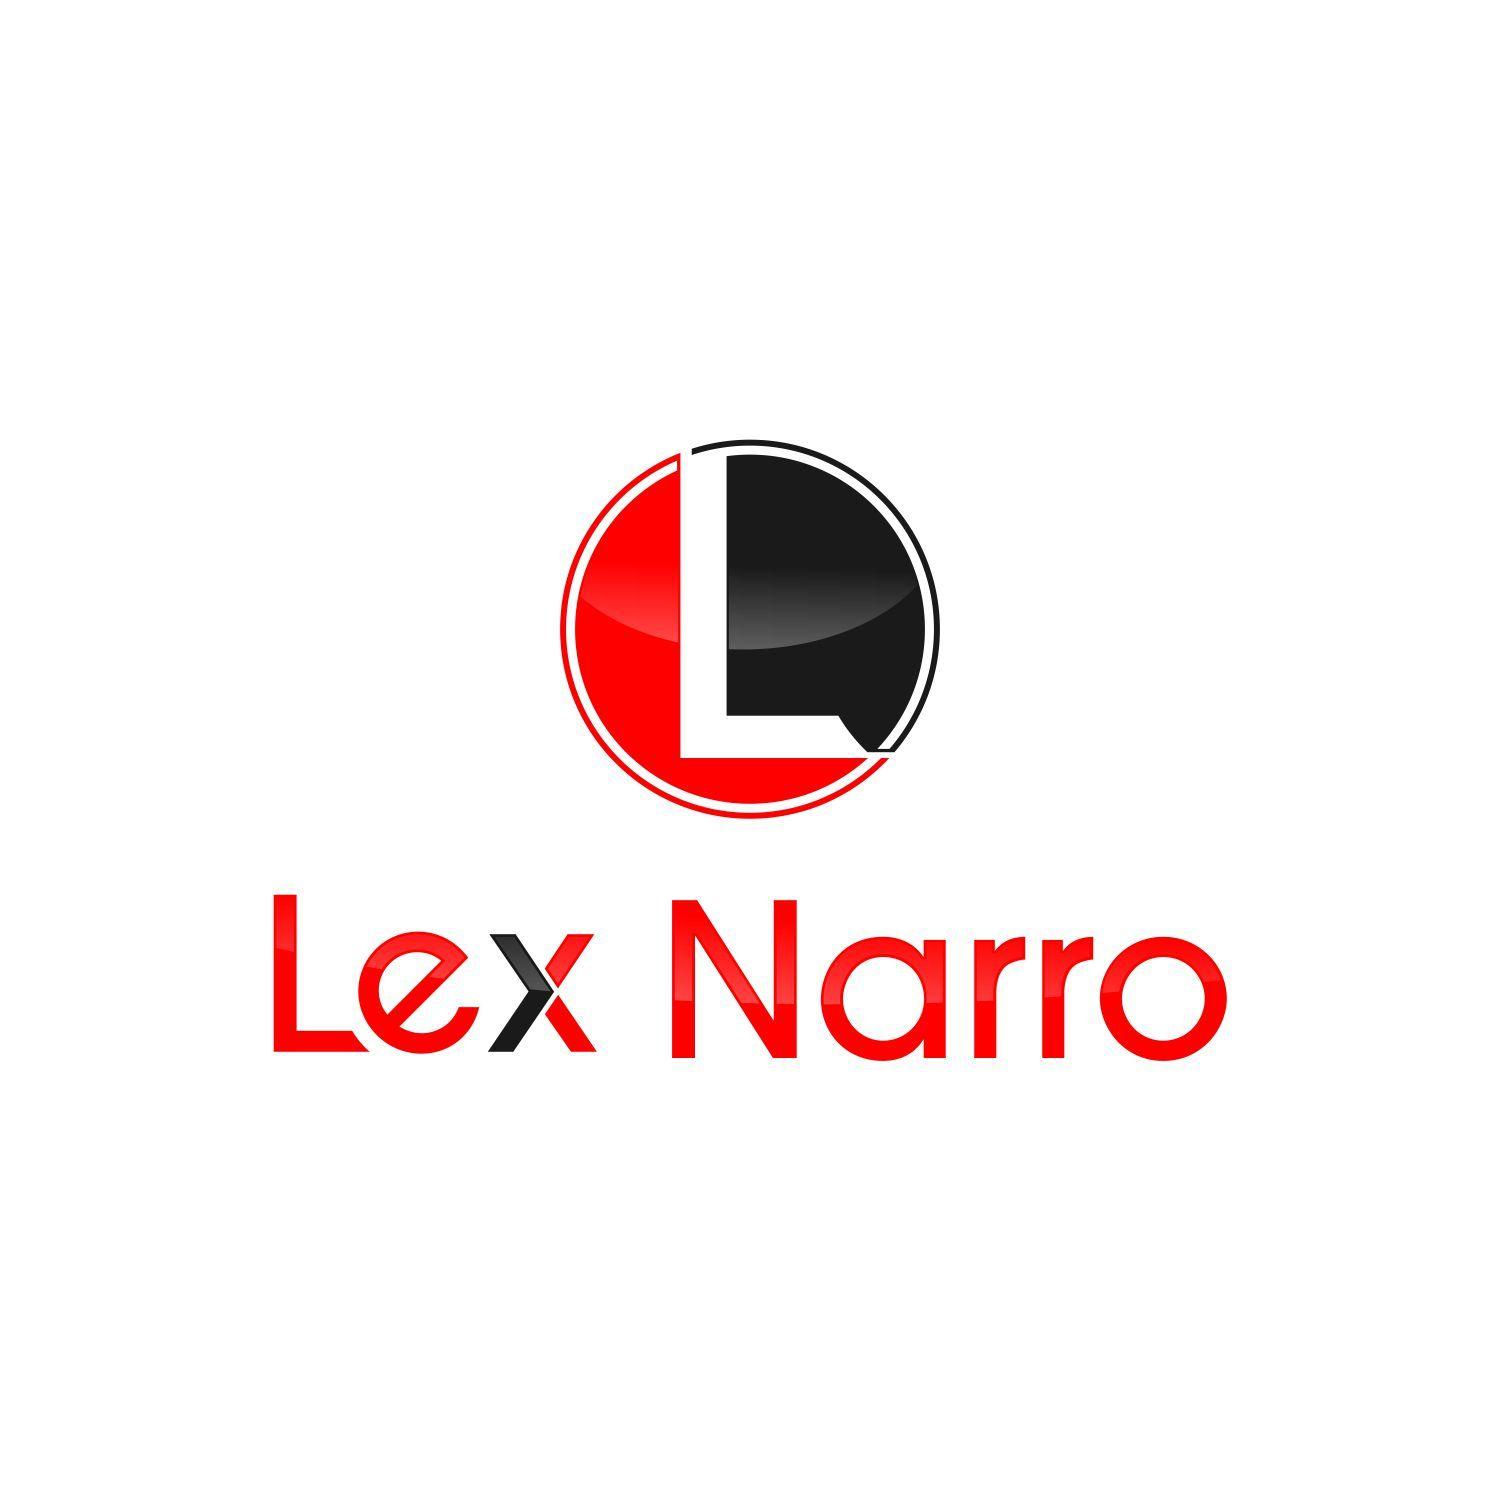 Lex Logo - Serious, Modern, Legal Logo Design for Lex Narro by Ranubis07 ...